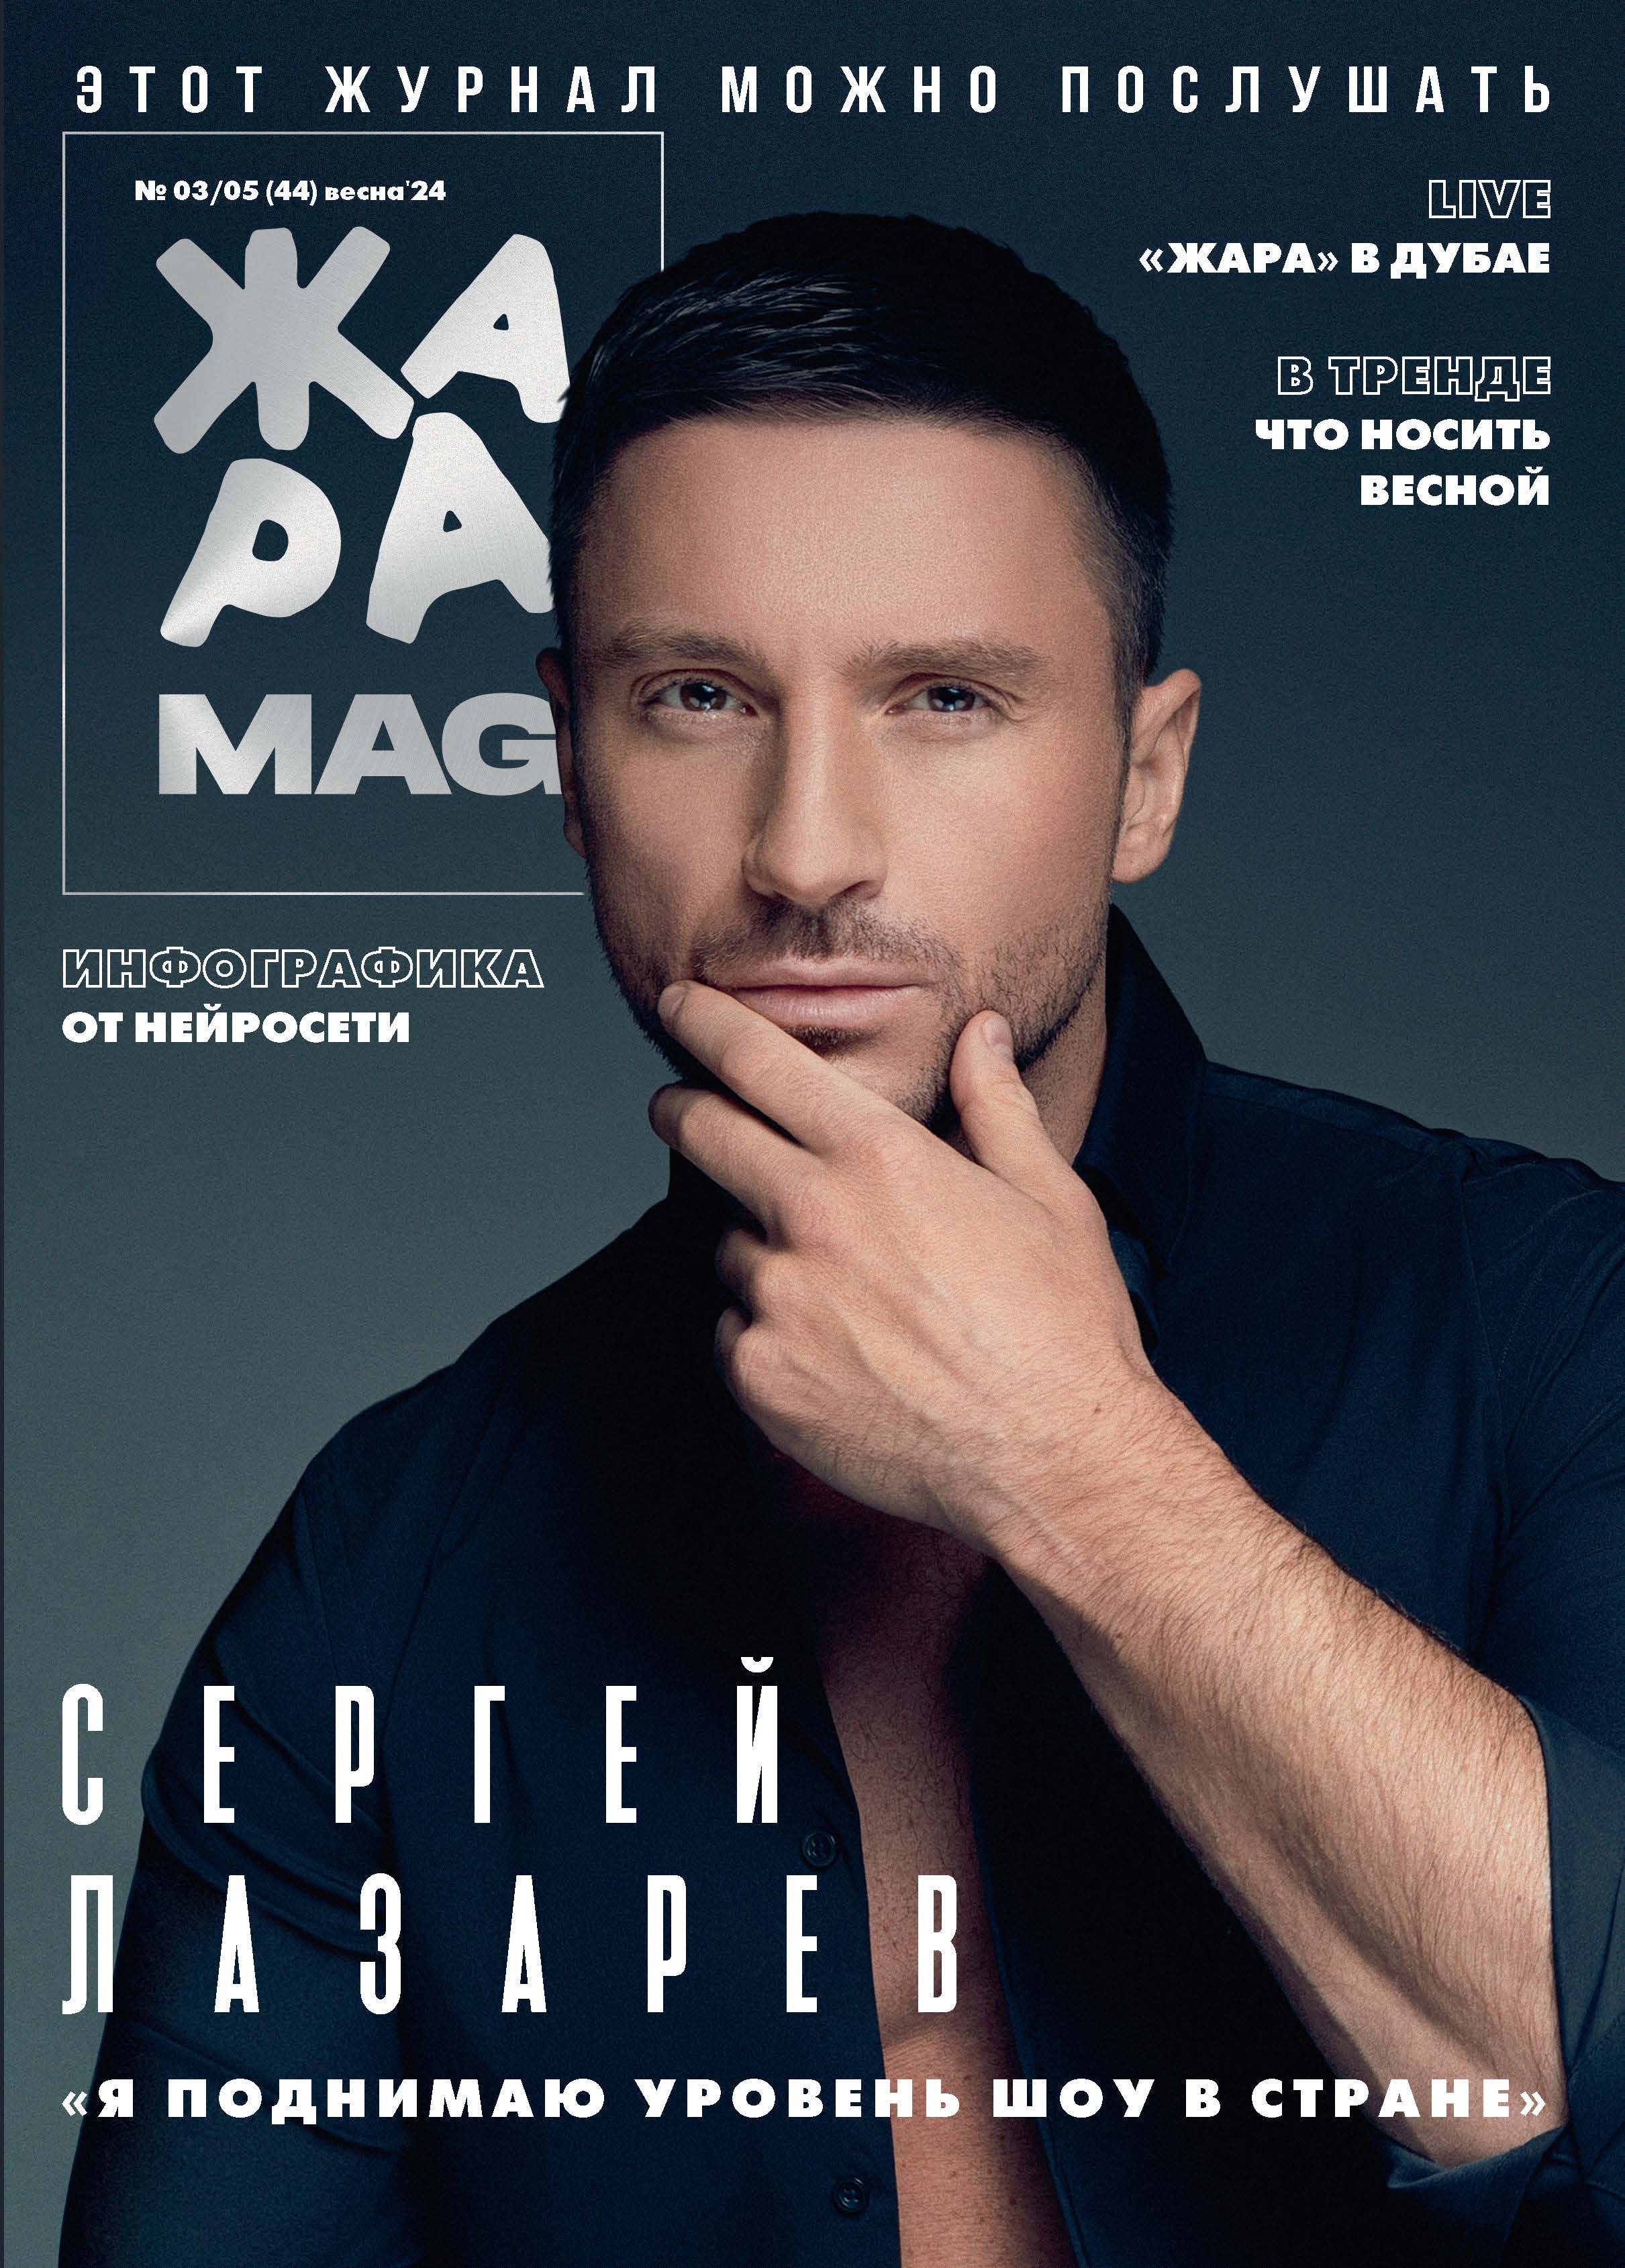 ЖАРА Magazine #44